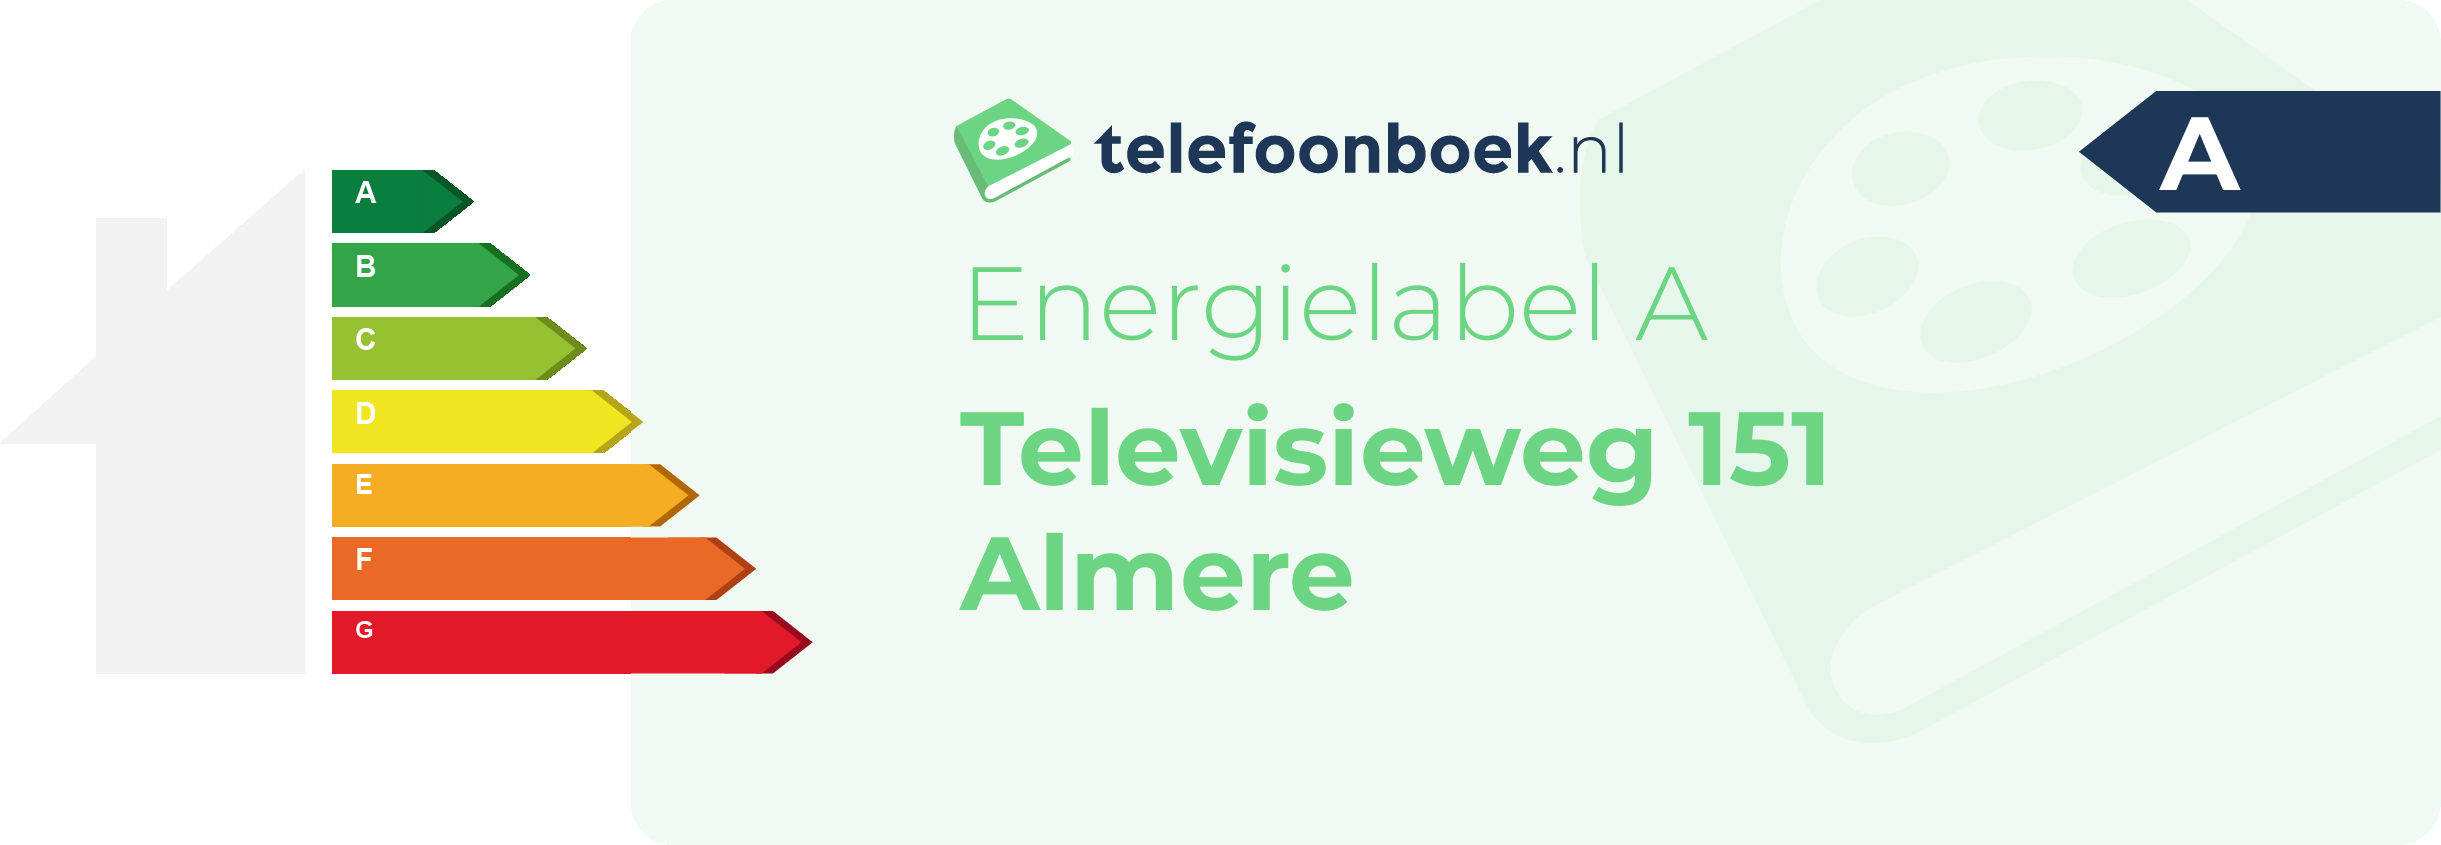 Energielabel Televisieweg 151 Almere